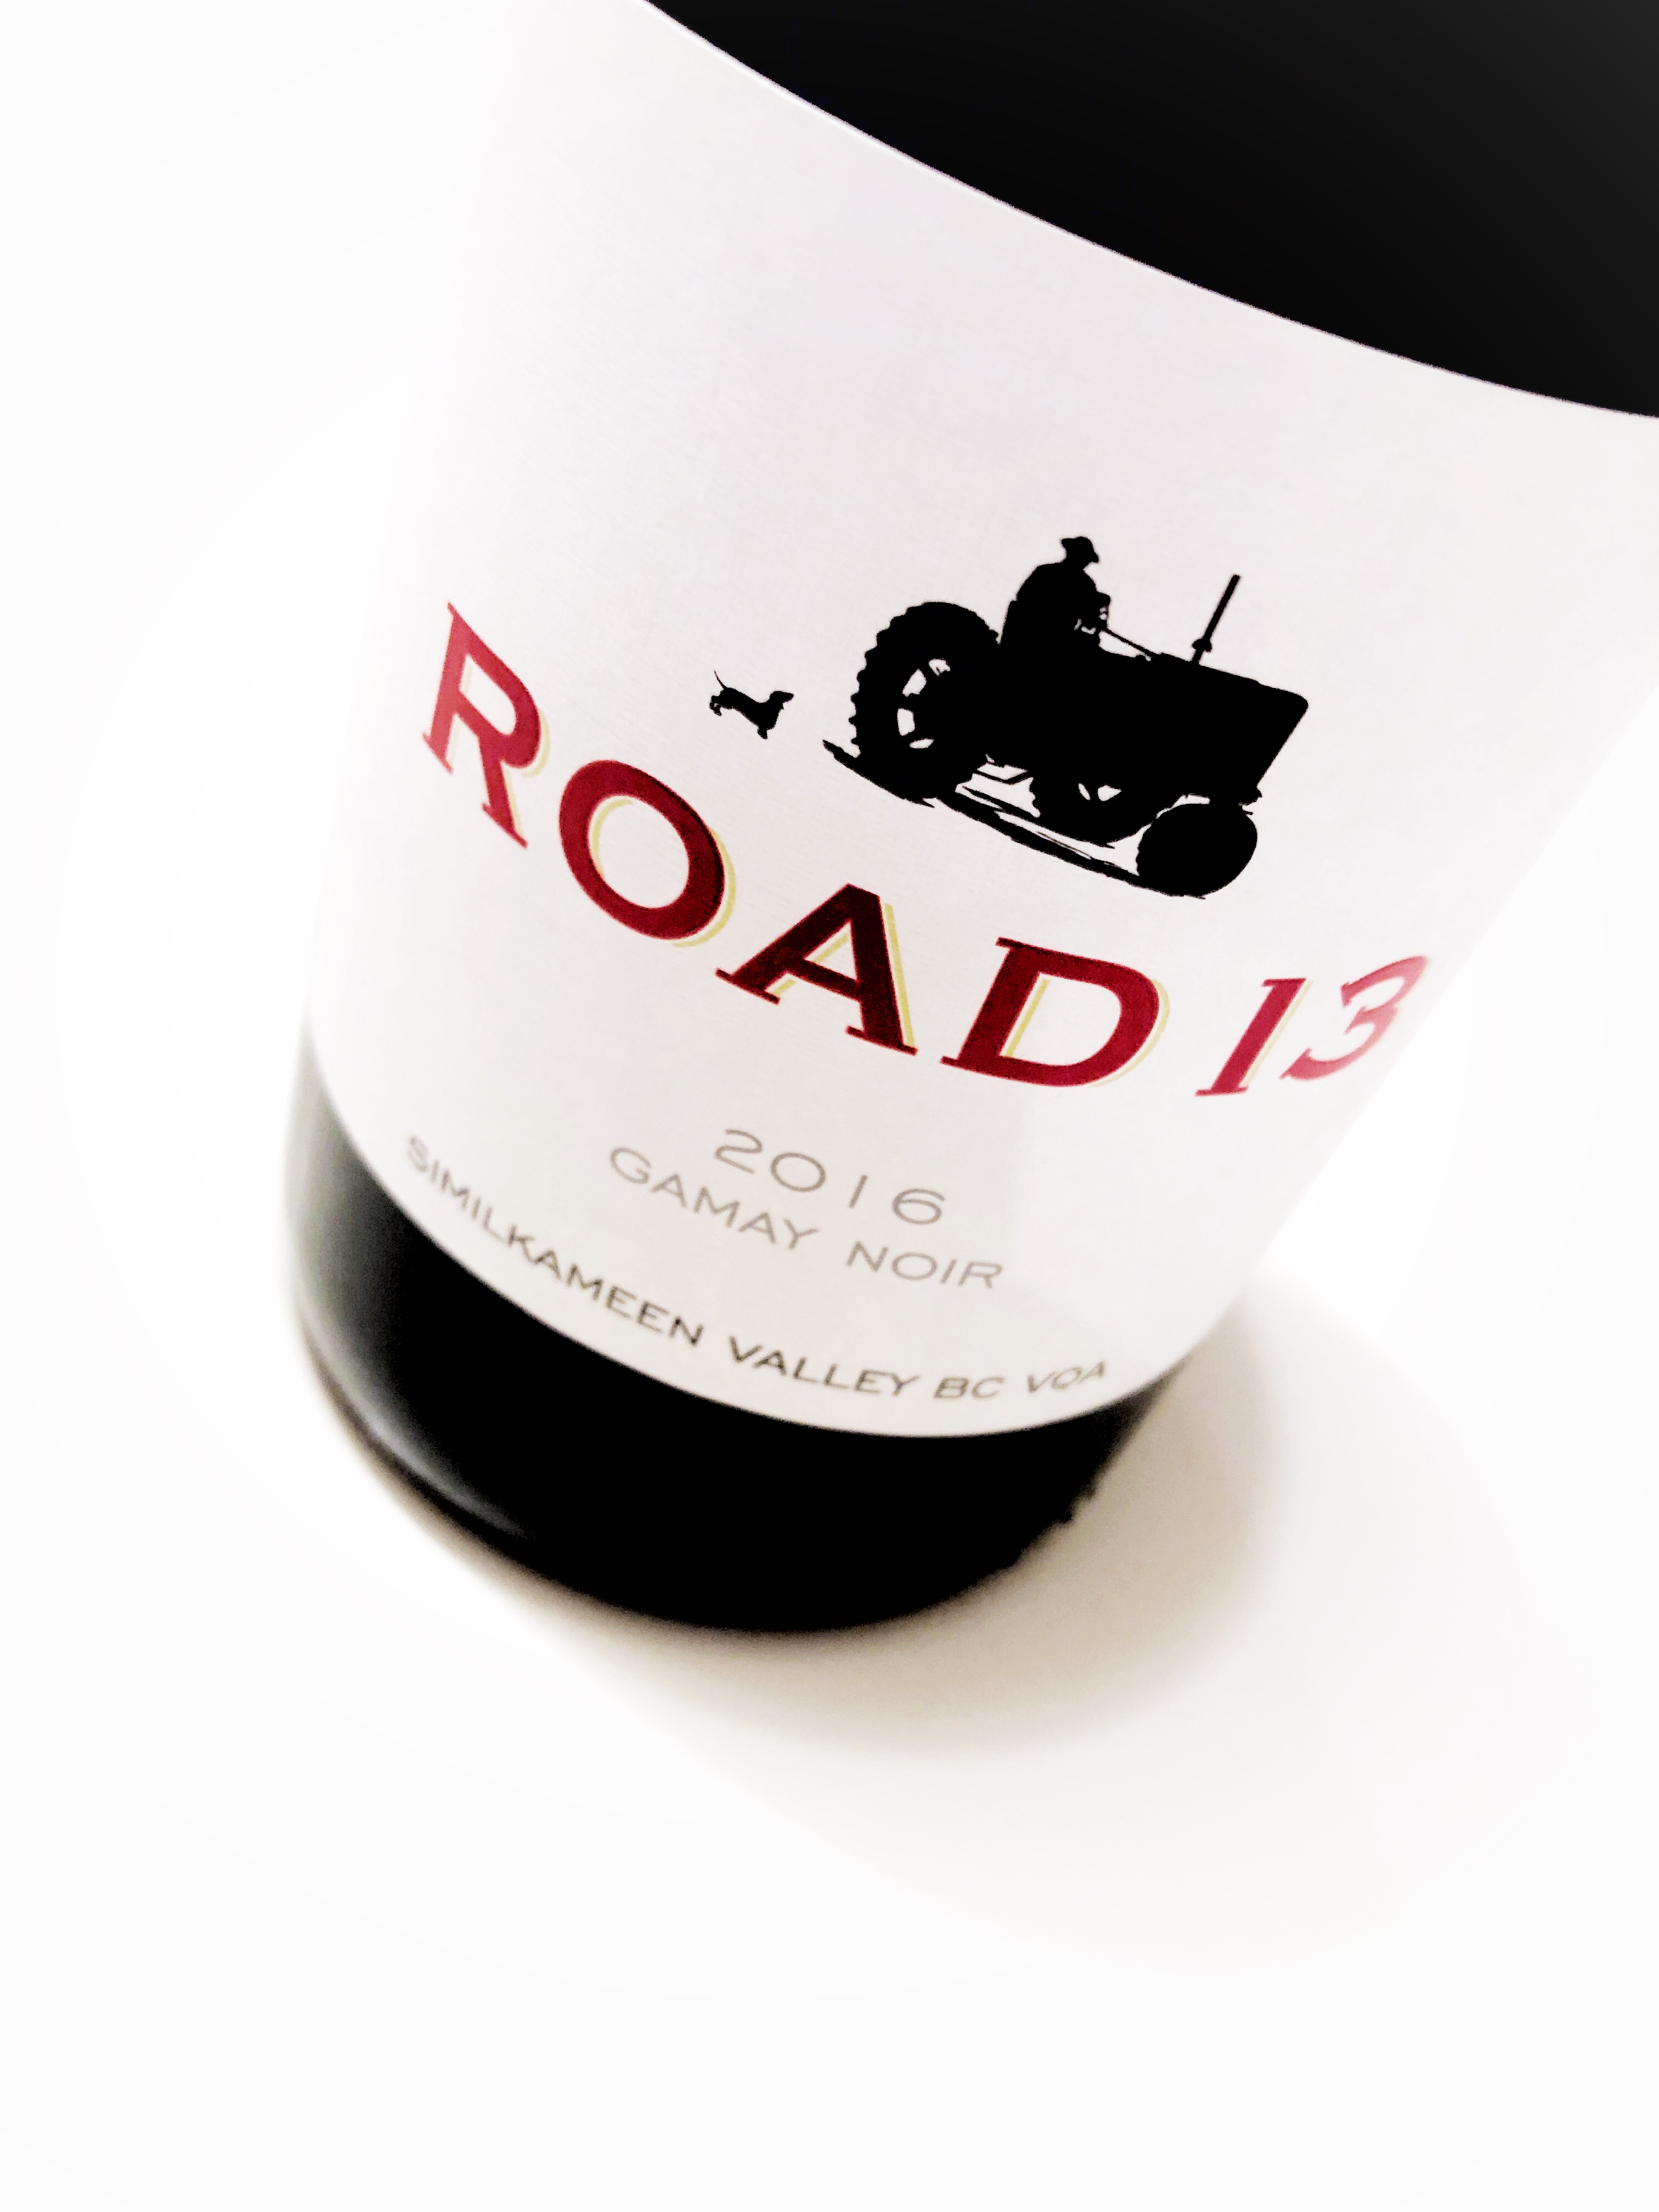 Road 13 Gamay - Valentine's Day wine